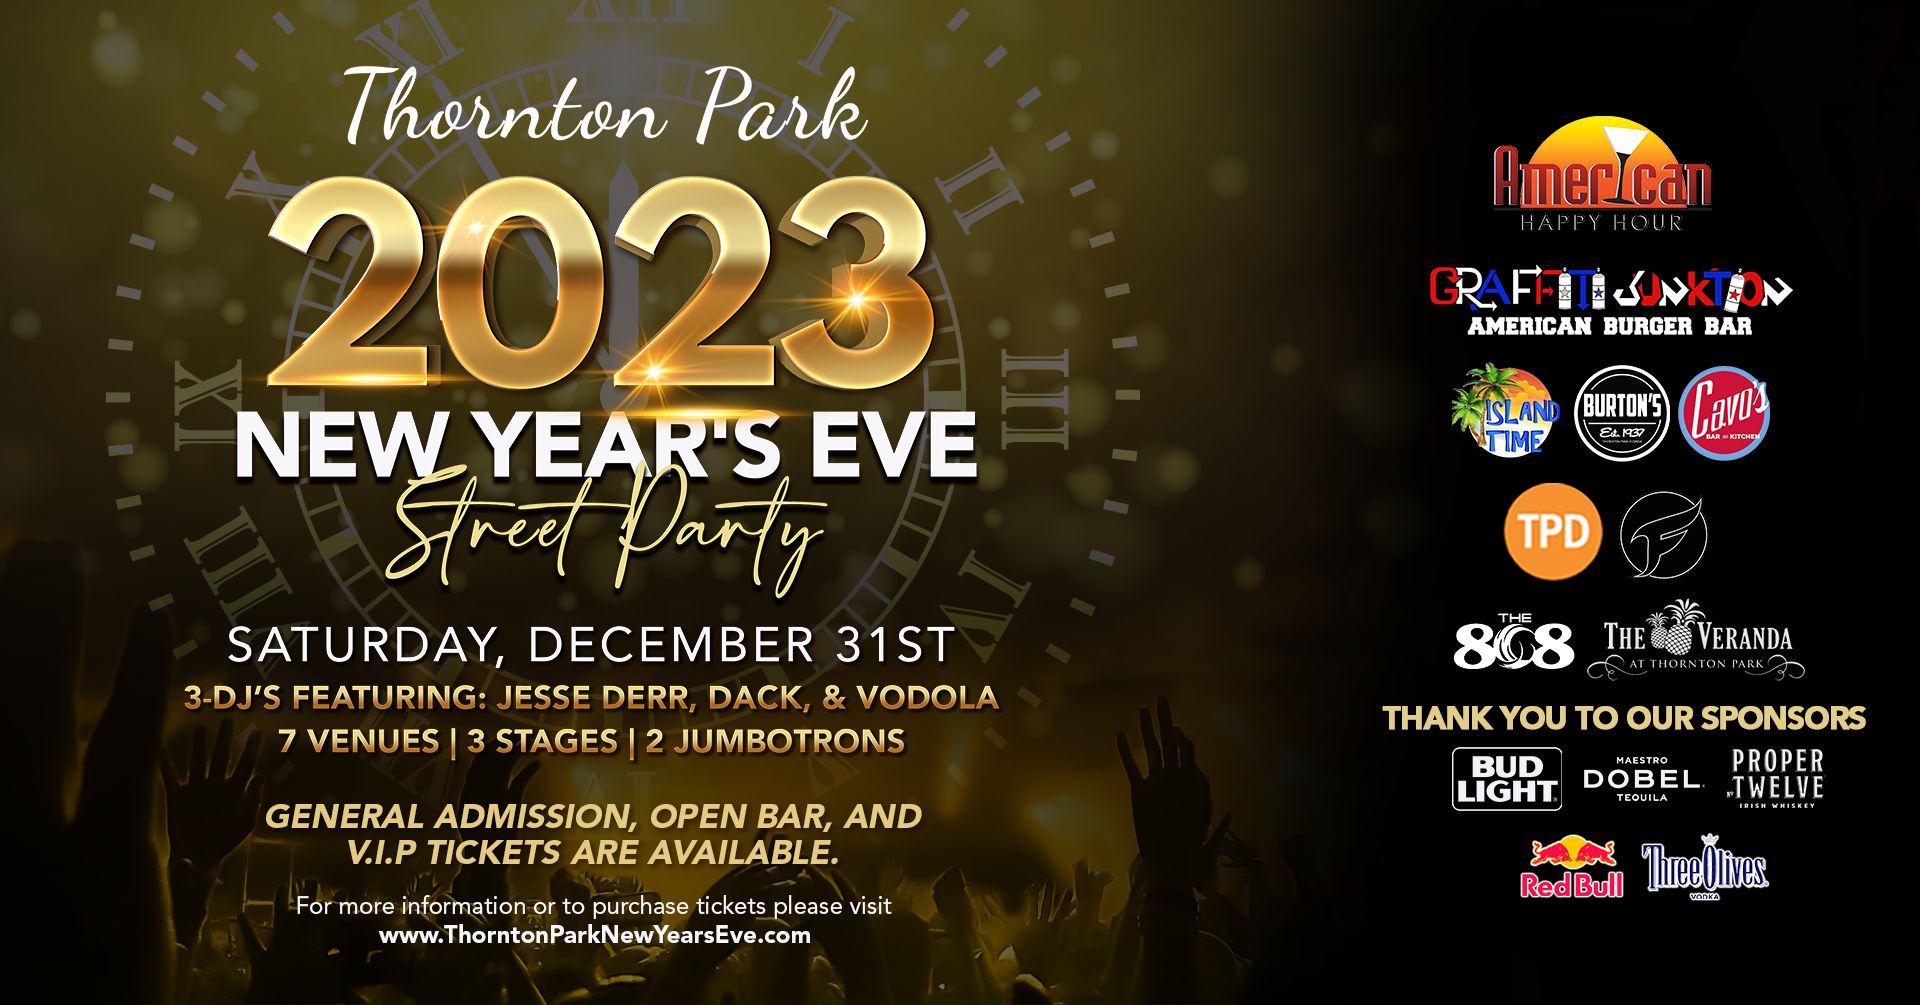 Thornton Park New Year's Eve Street Party 2023, Orlando, Florida, United States